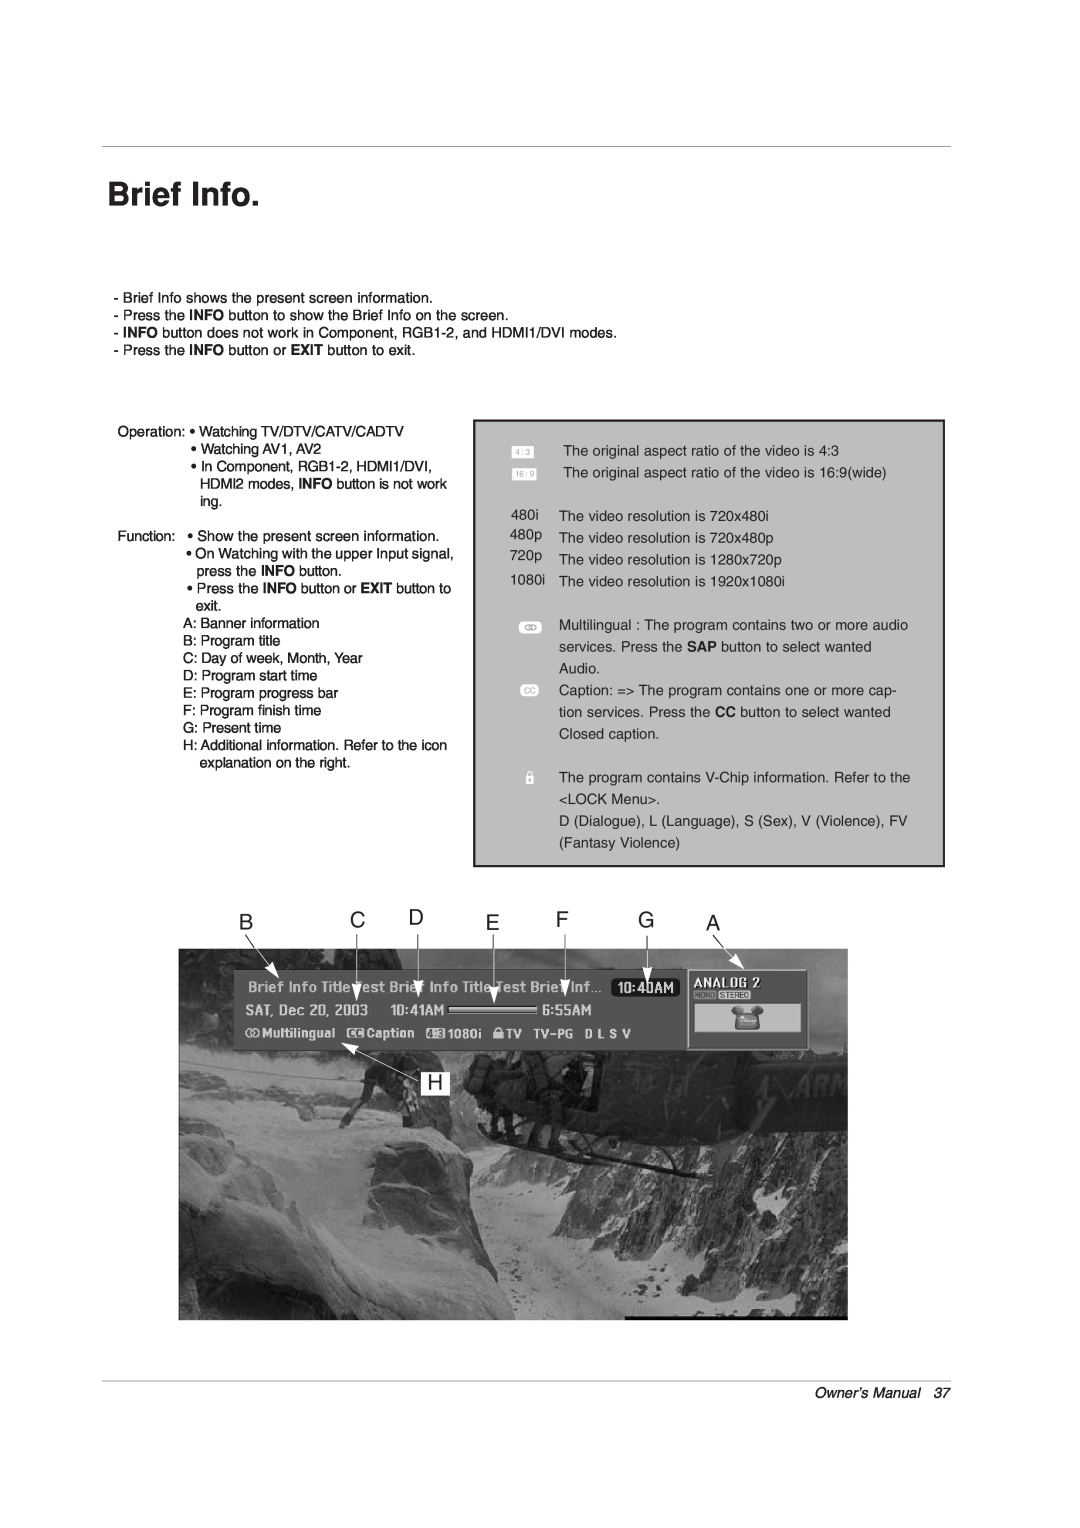 LG Electronics 42PX7DC owner manual Brief Info, B C D E F G A H 